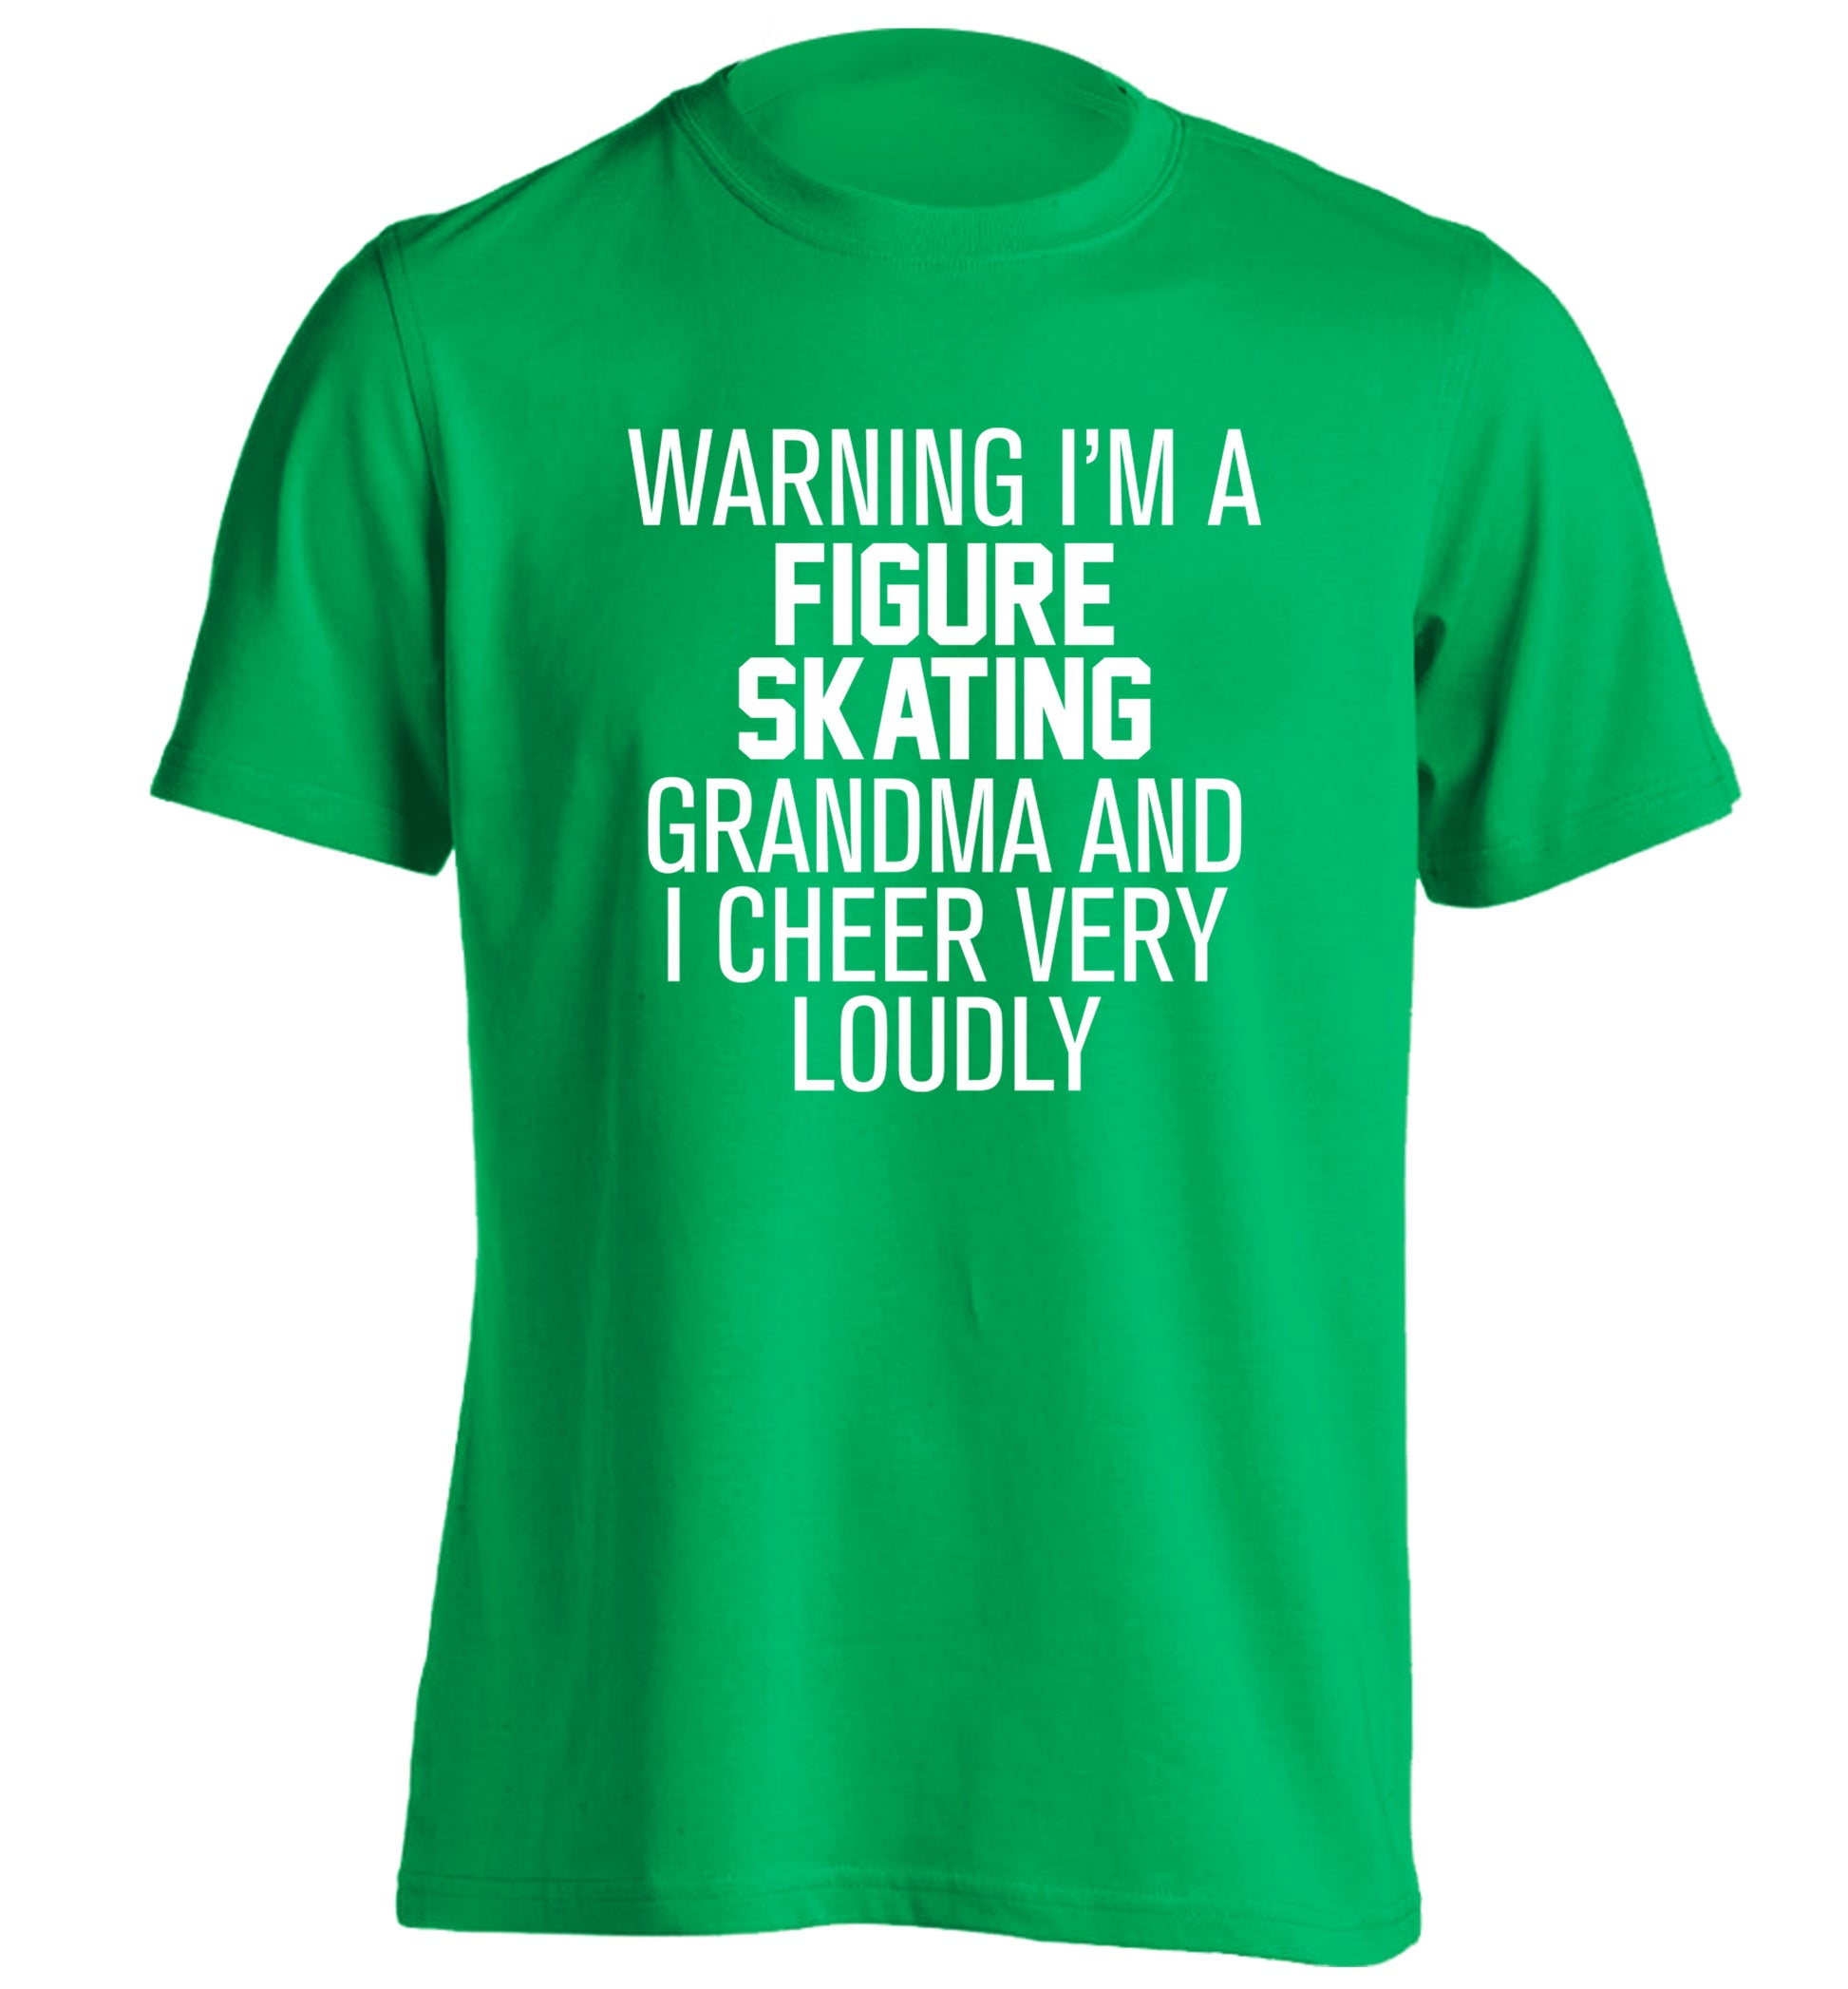 Warning I'm a figure skating grandma and I cheer very loudly adults unisexgreen Tshirt 2XL